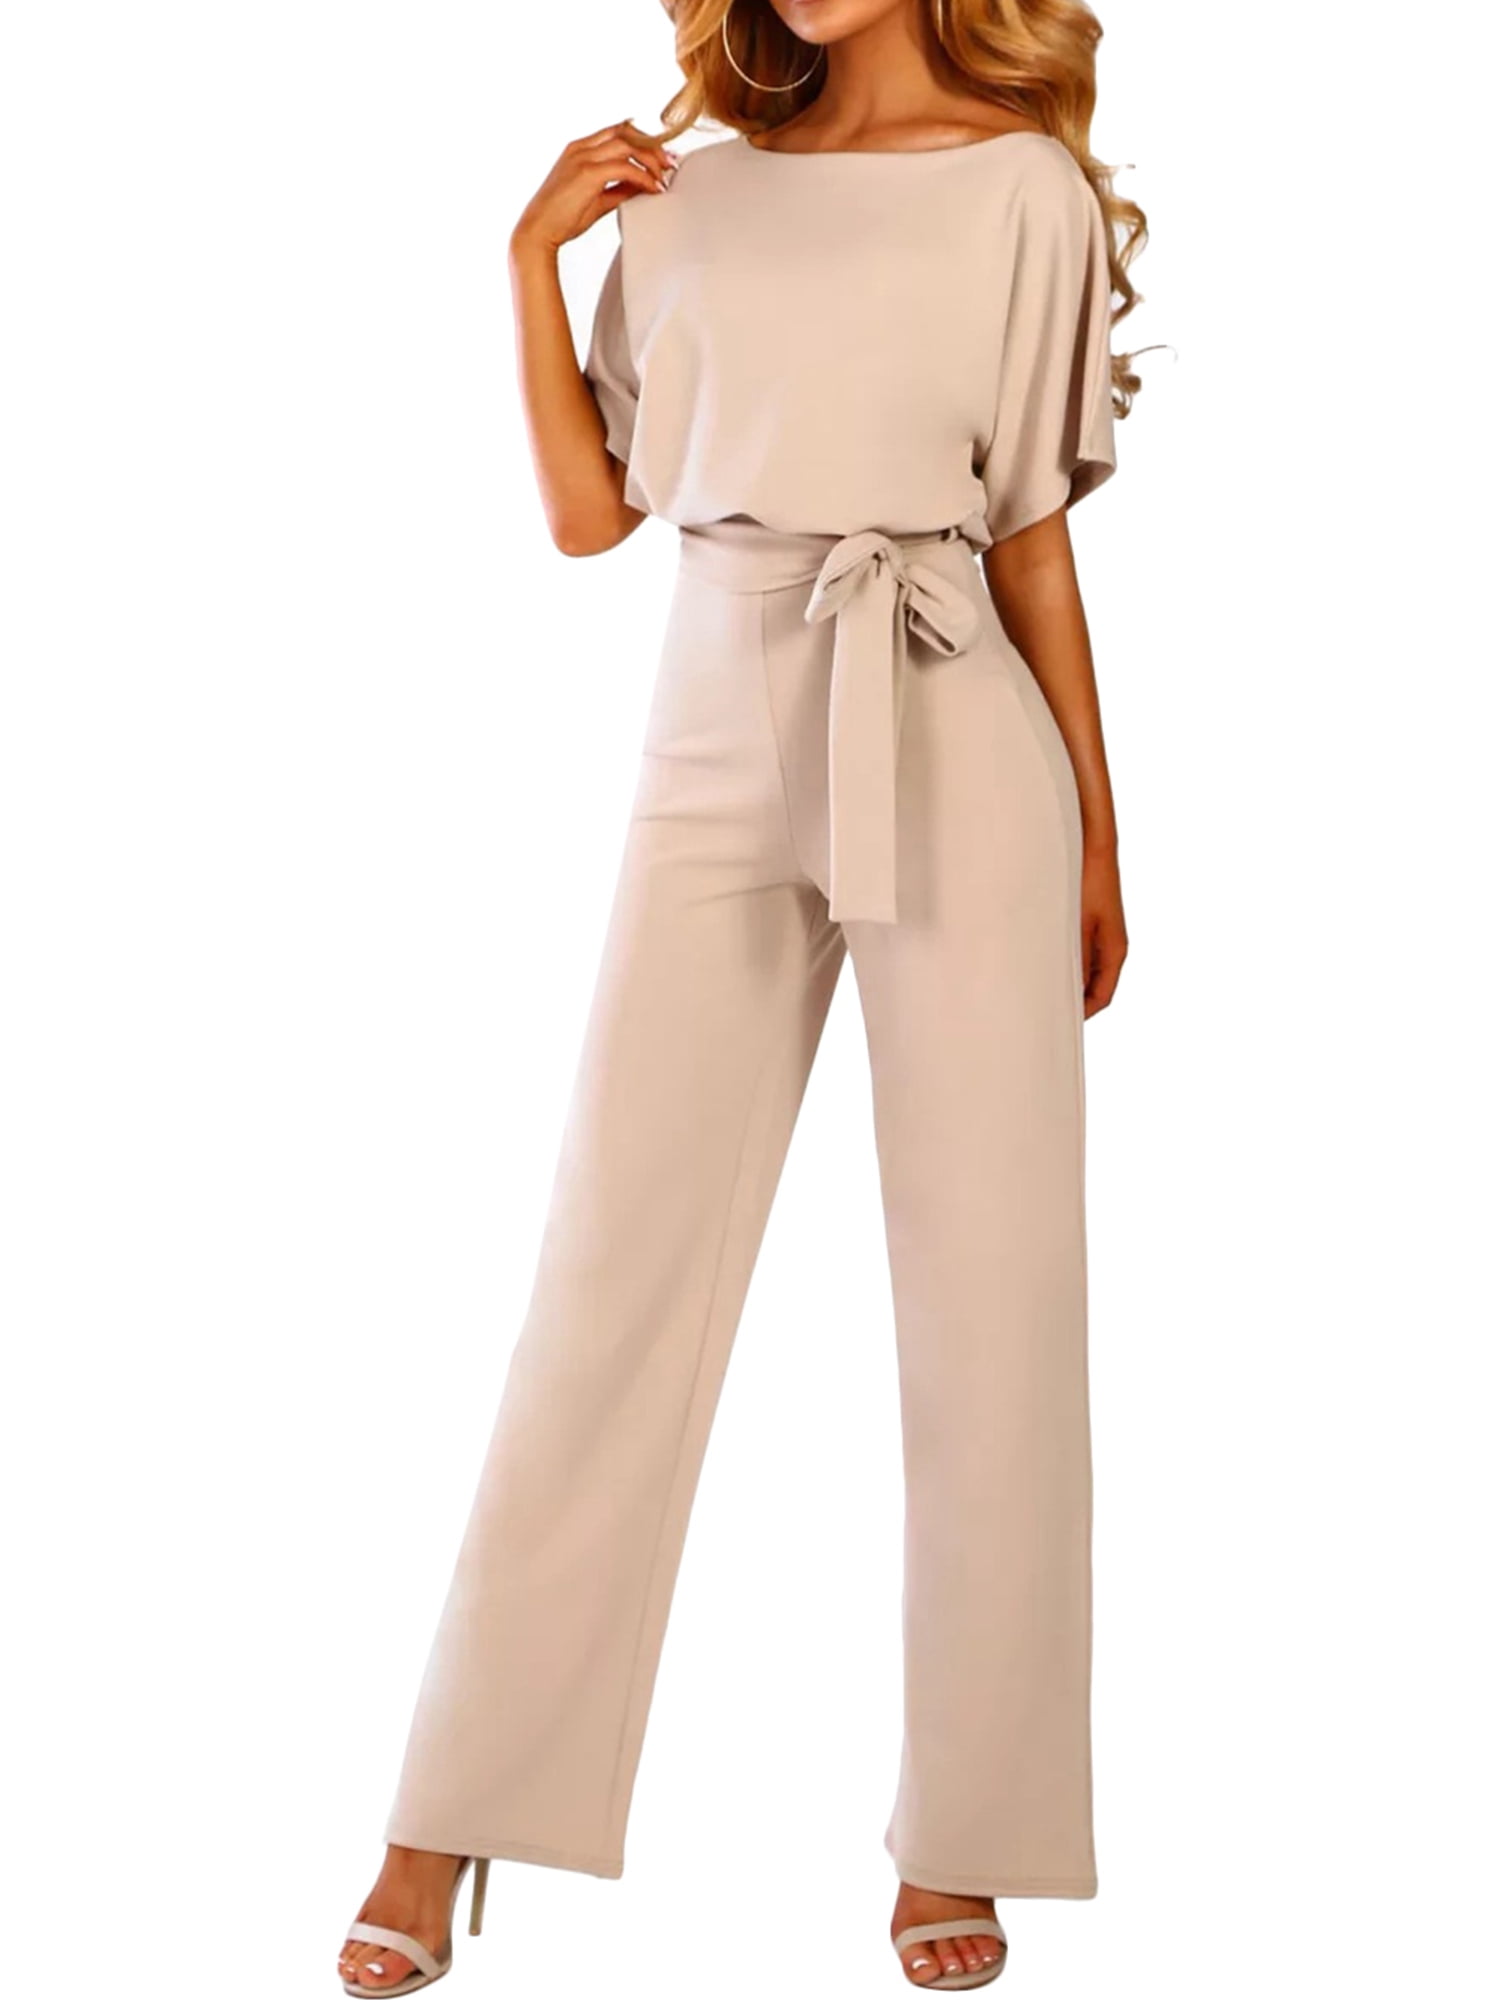 TQWQT Plus Size Jumpsuits for Women Dressy Party Halter Neck Sleeveless  High Waist Wide Leg Pants One Piece Jumpsuits,Yellow M - Walmart.com